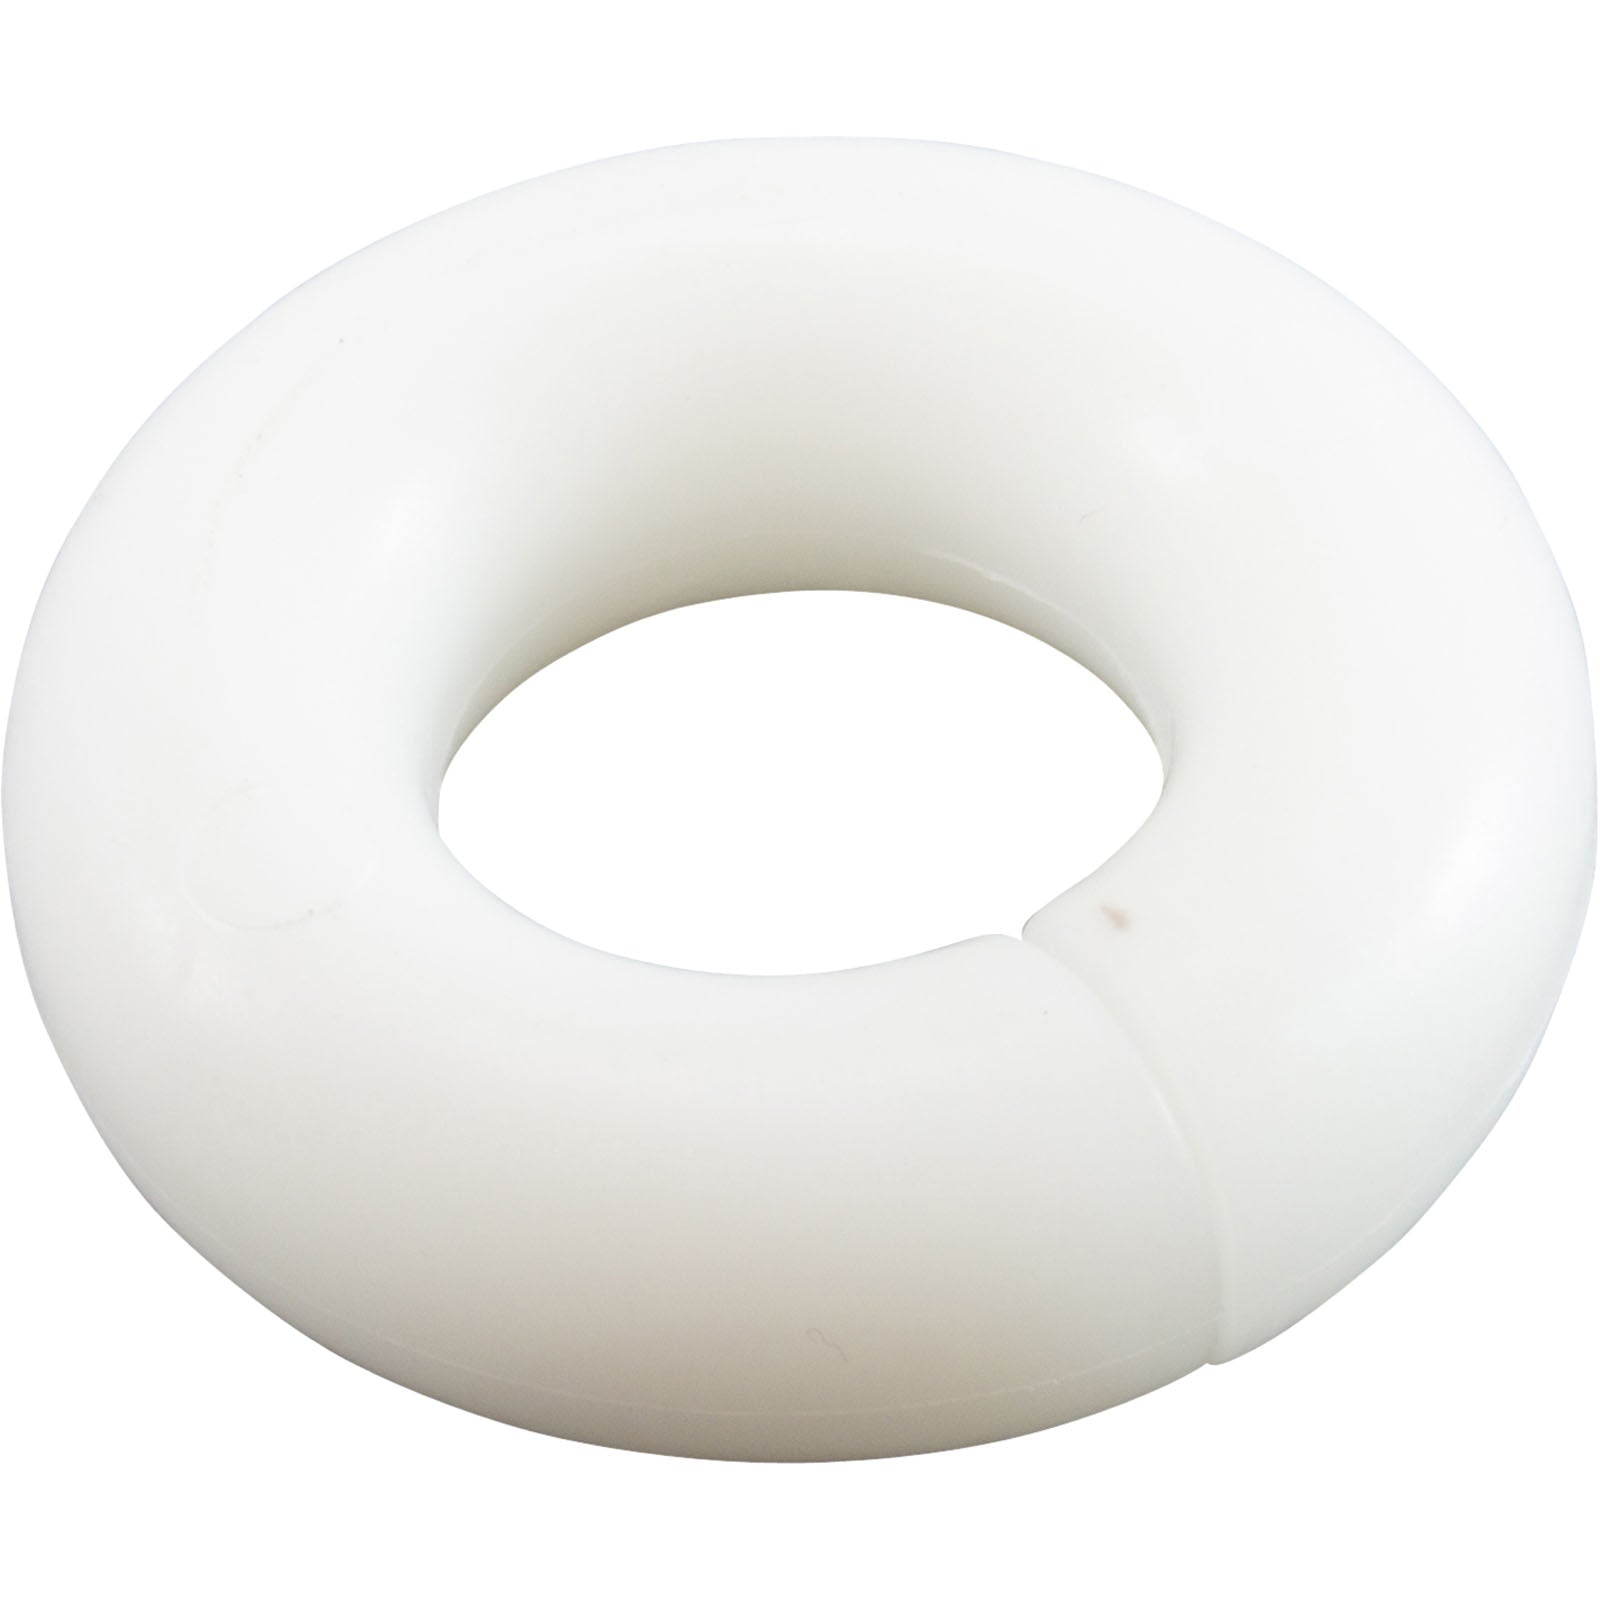 Sweep Hose Wear Ring, White, Generic B10, 25563-010-000